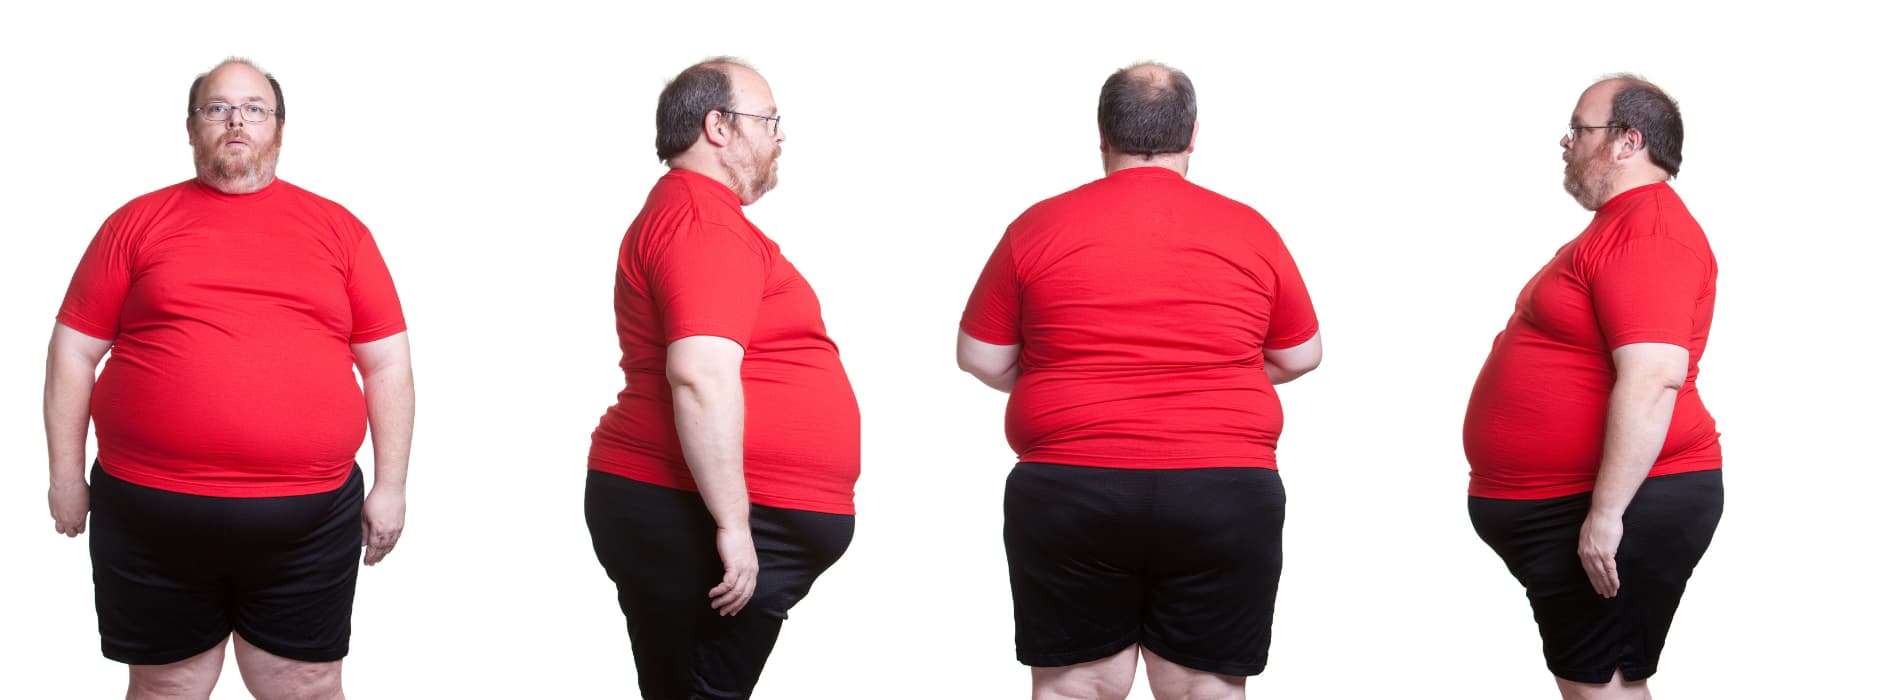 Bmi of male obesity